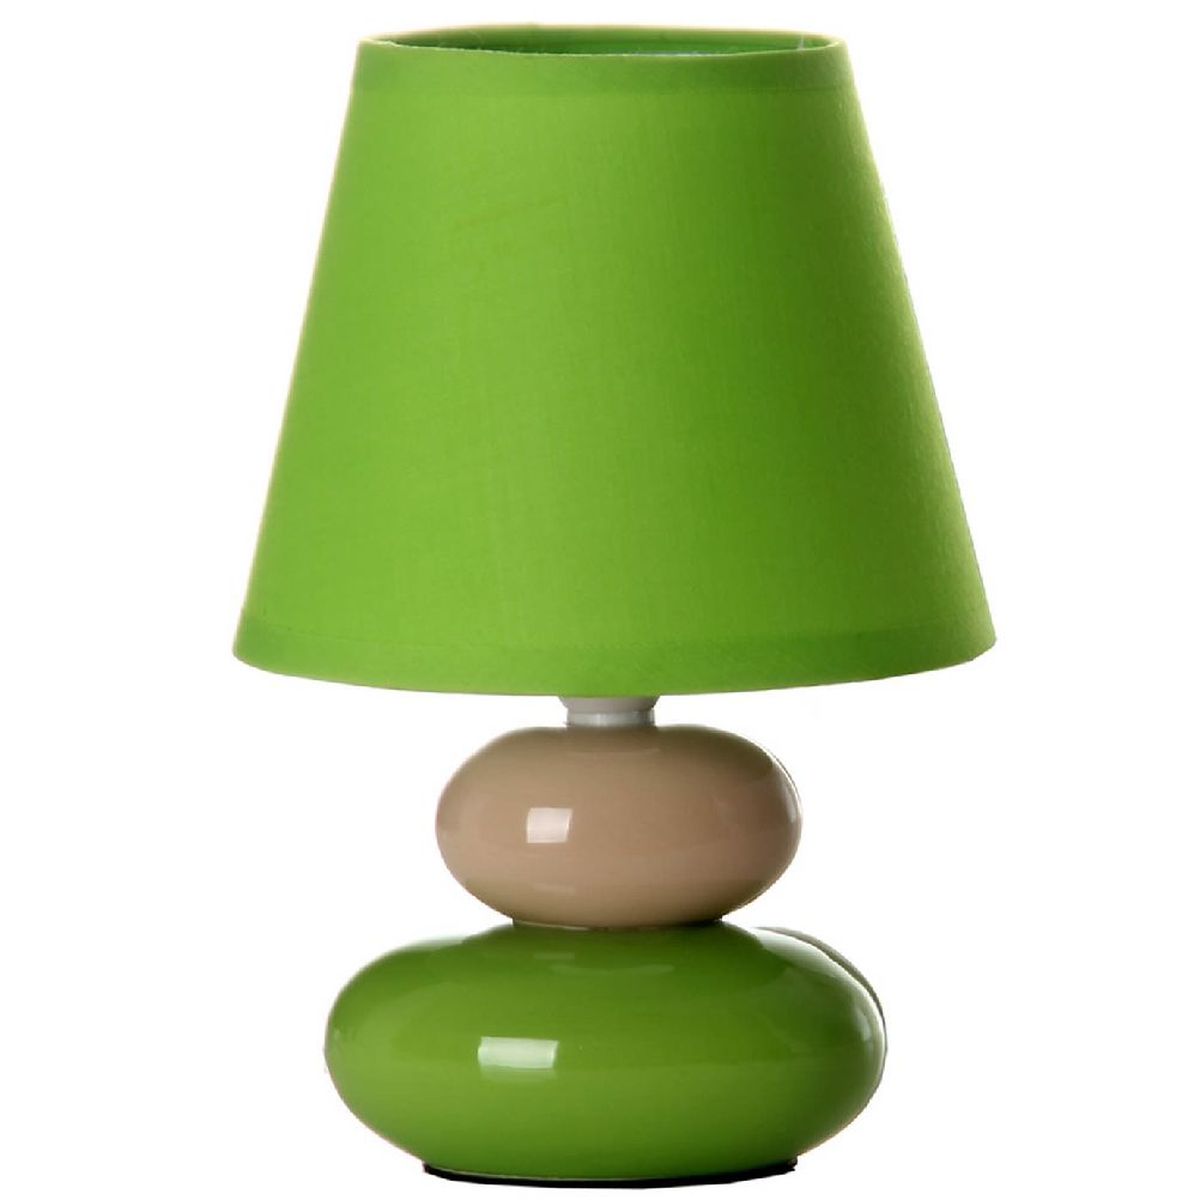 Lampe galets - Vert et crme - 24.5 cm